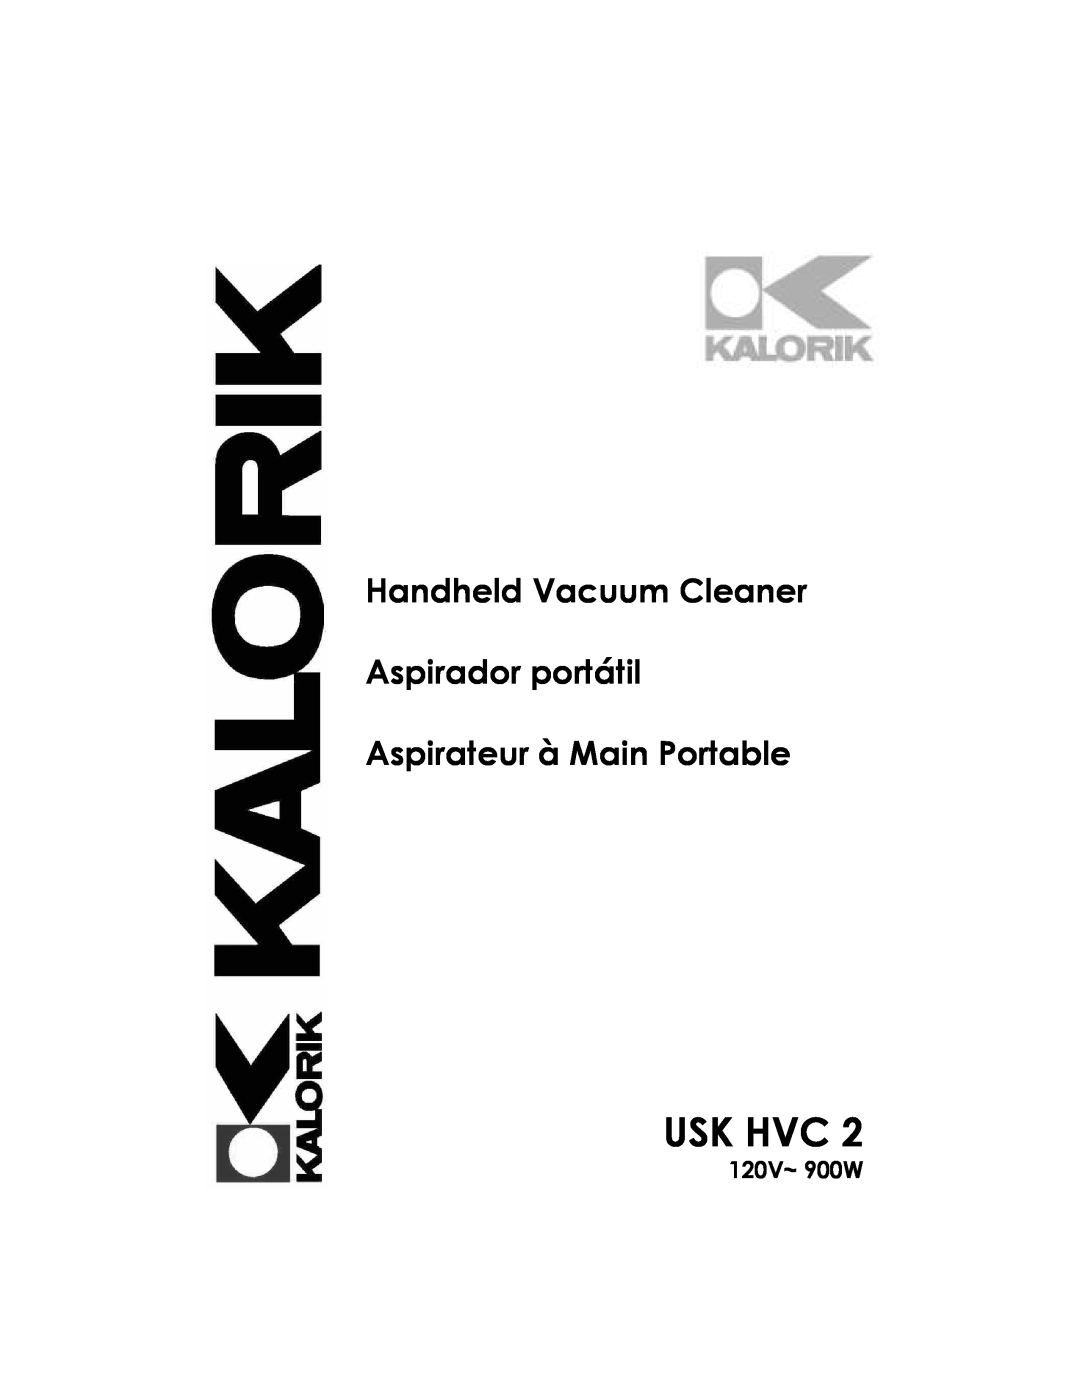 Kalorik USK HVC 2 manual Usk Hvc, 120V~ 900W, Handheld Vacuum Cleaner Aspirador portátil, Aspirateur à Main Portable 